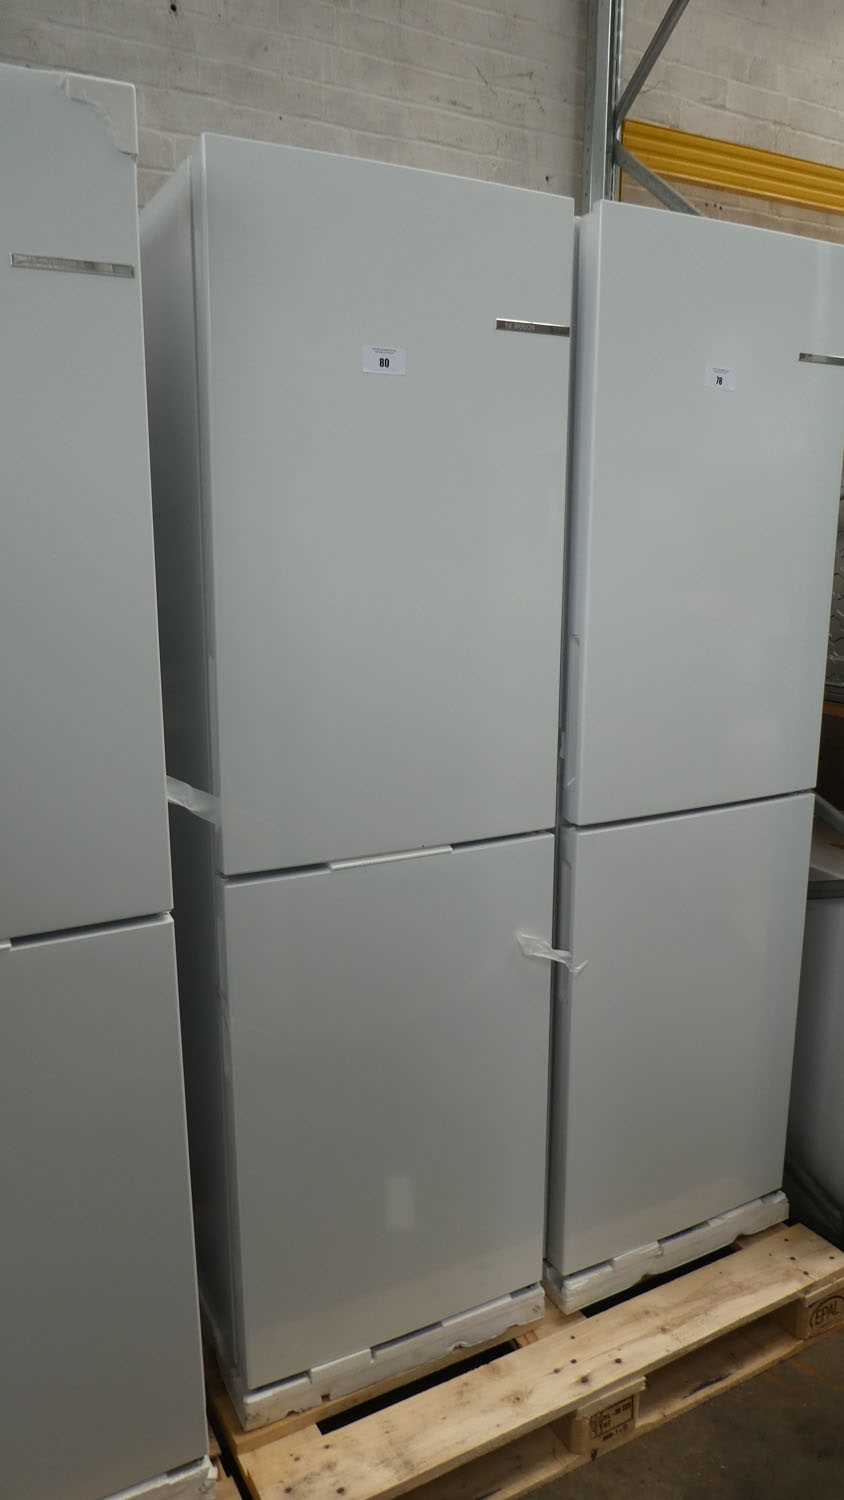 Lot 80 - KGN27NWFAGB Bosch Free-standing fridge-freezer